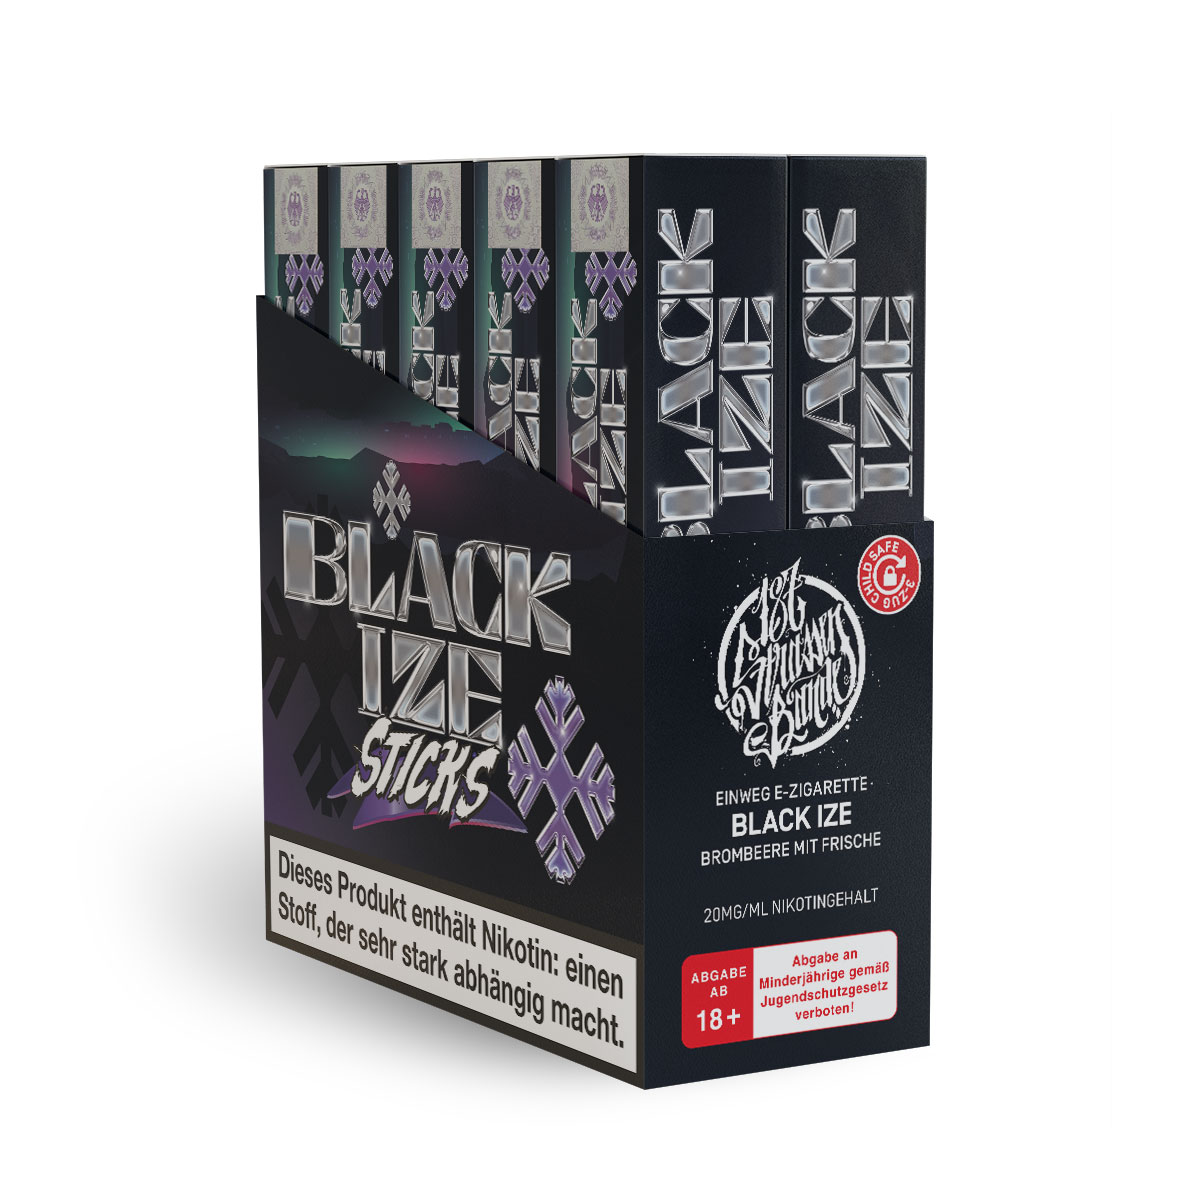 187 Sticks Black Ize 20mg/ml (Steuerware)